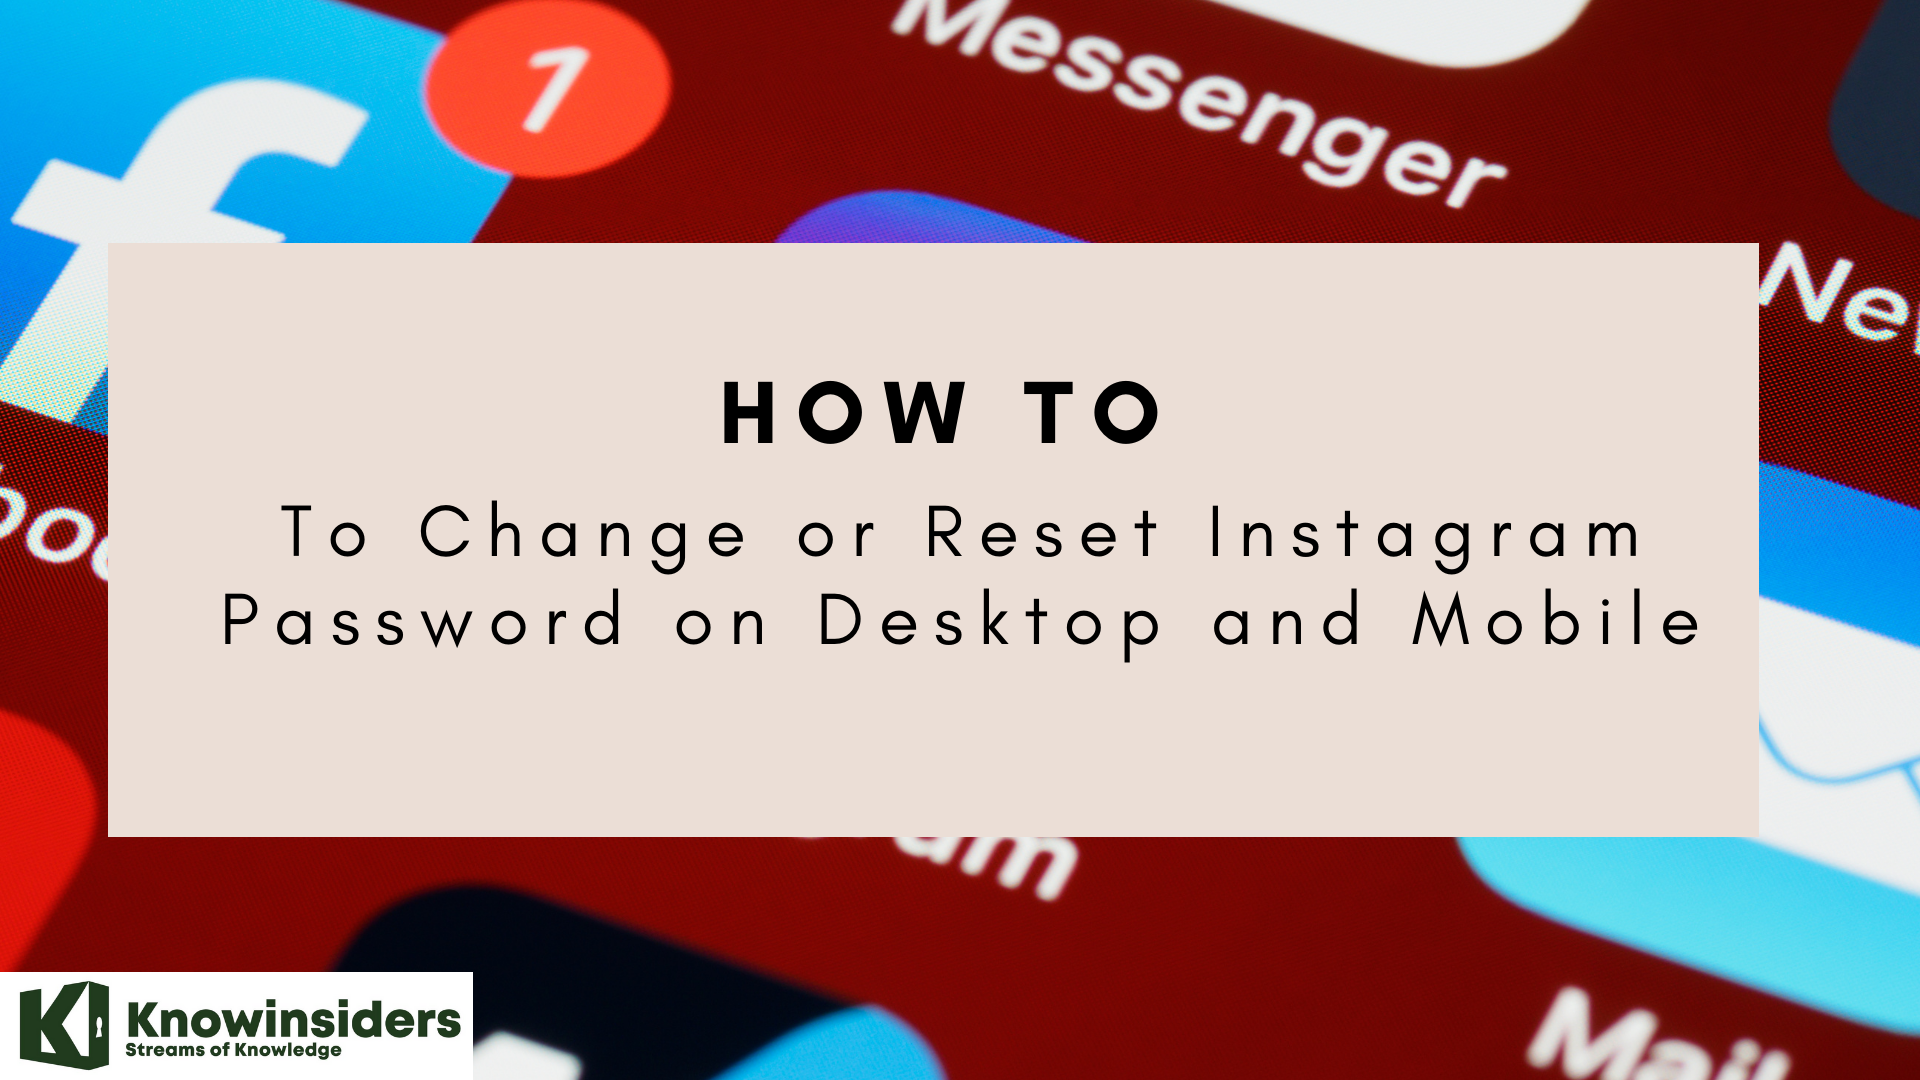 The Best Ways To Change or Reset Instagram Password on Desktop and Mobile